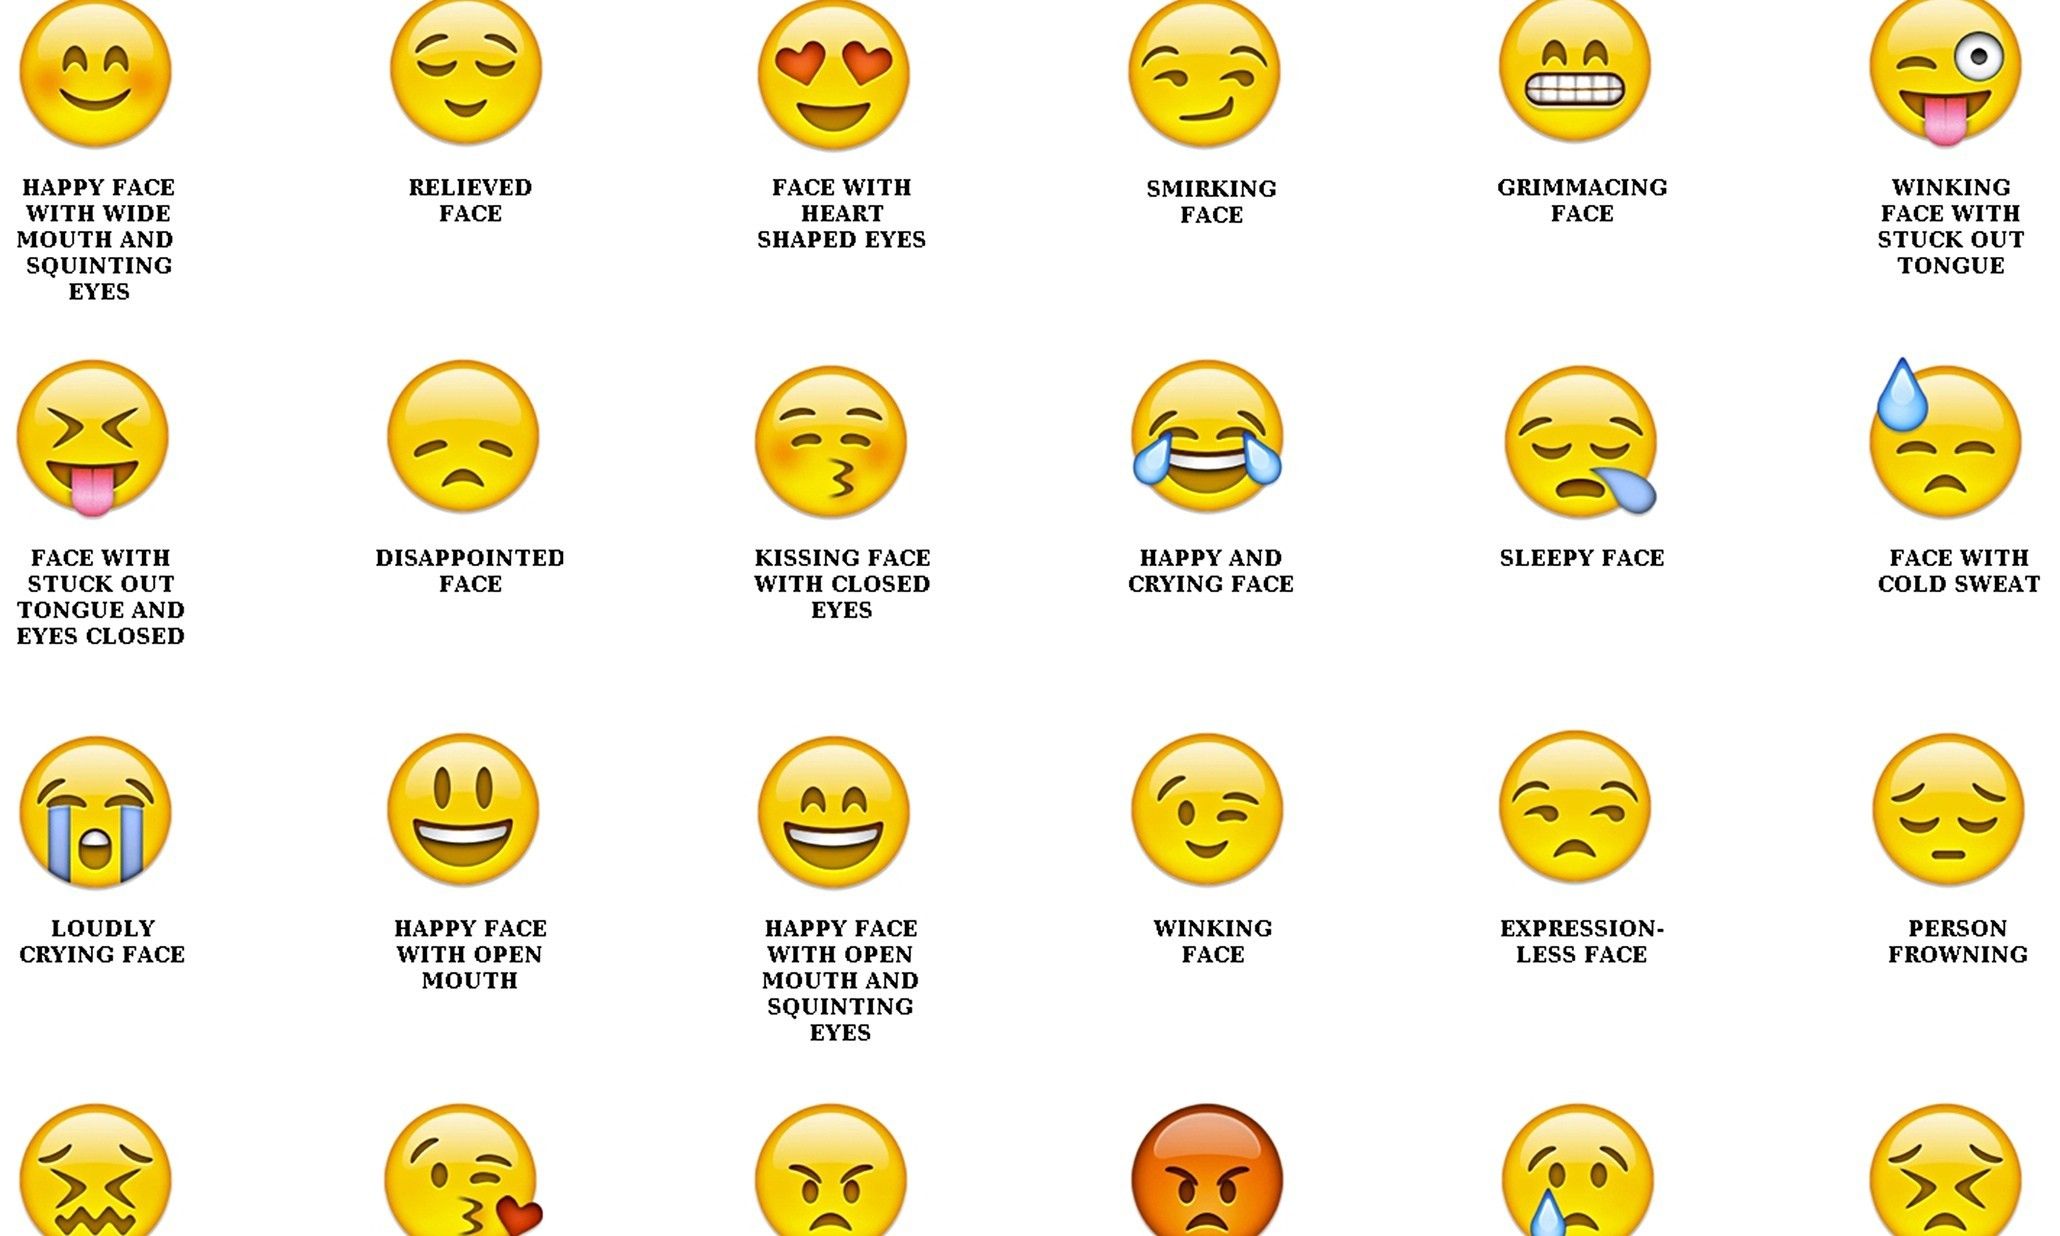 Emoji Face Wallpaper